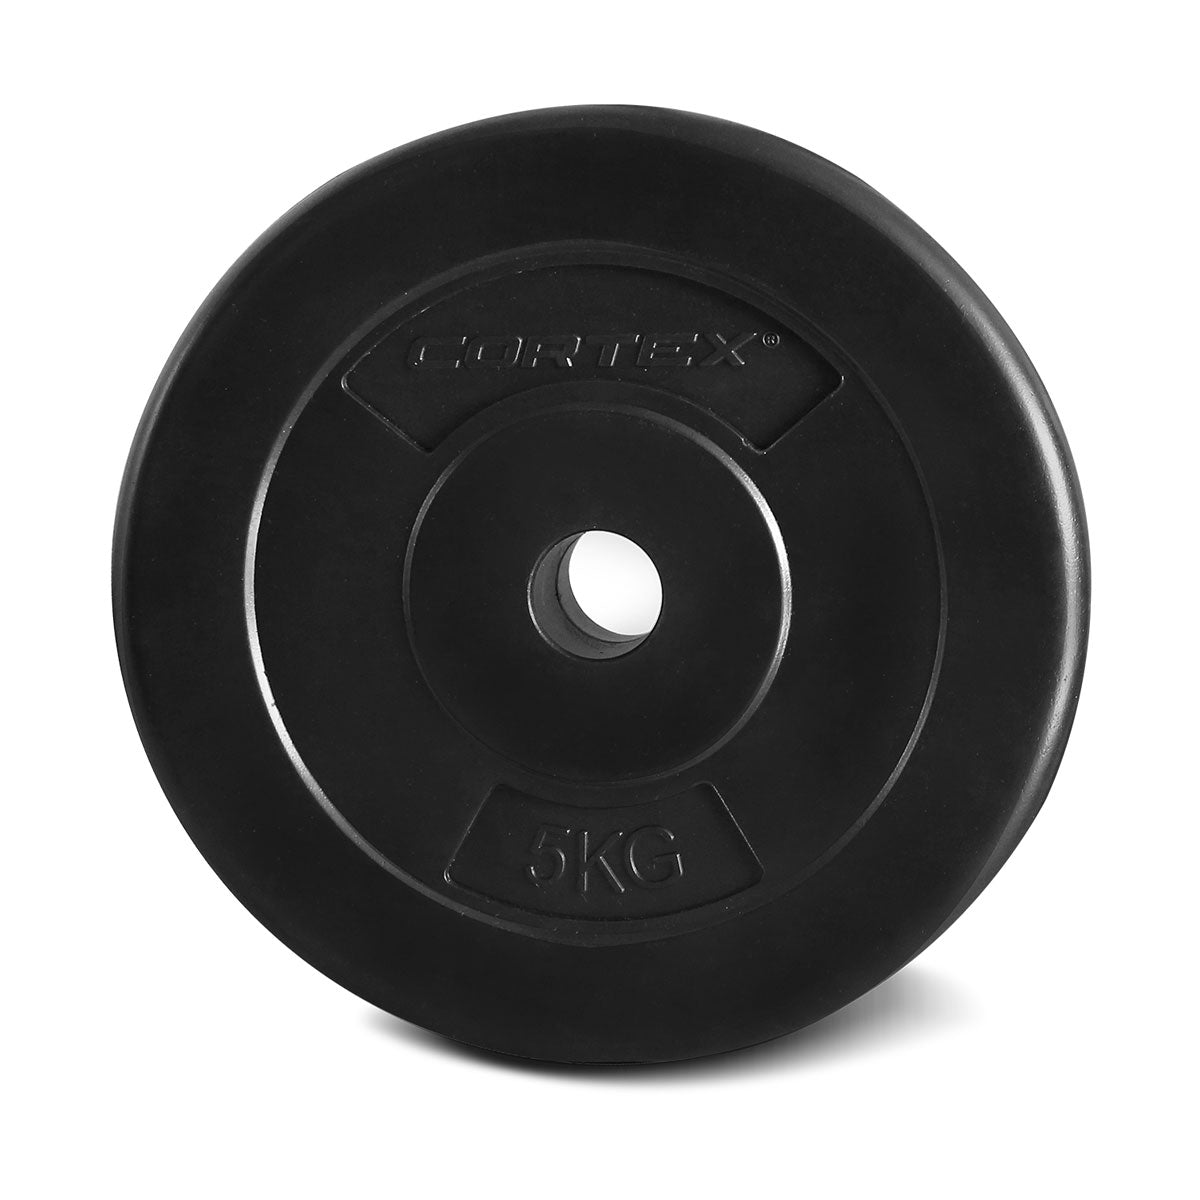 CORTEX 85kg EnduraShell Barbell & Dumbbell Weight Set